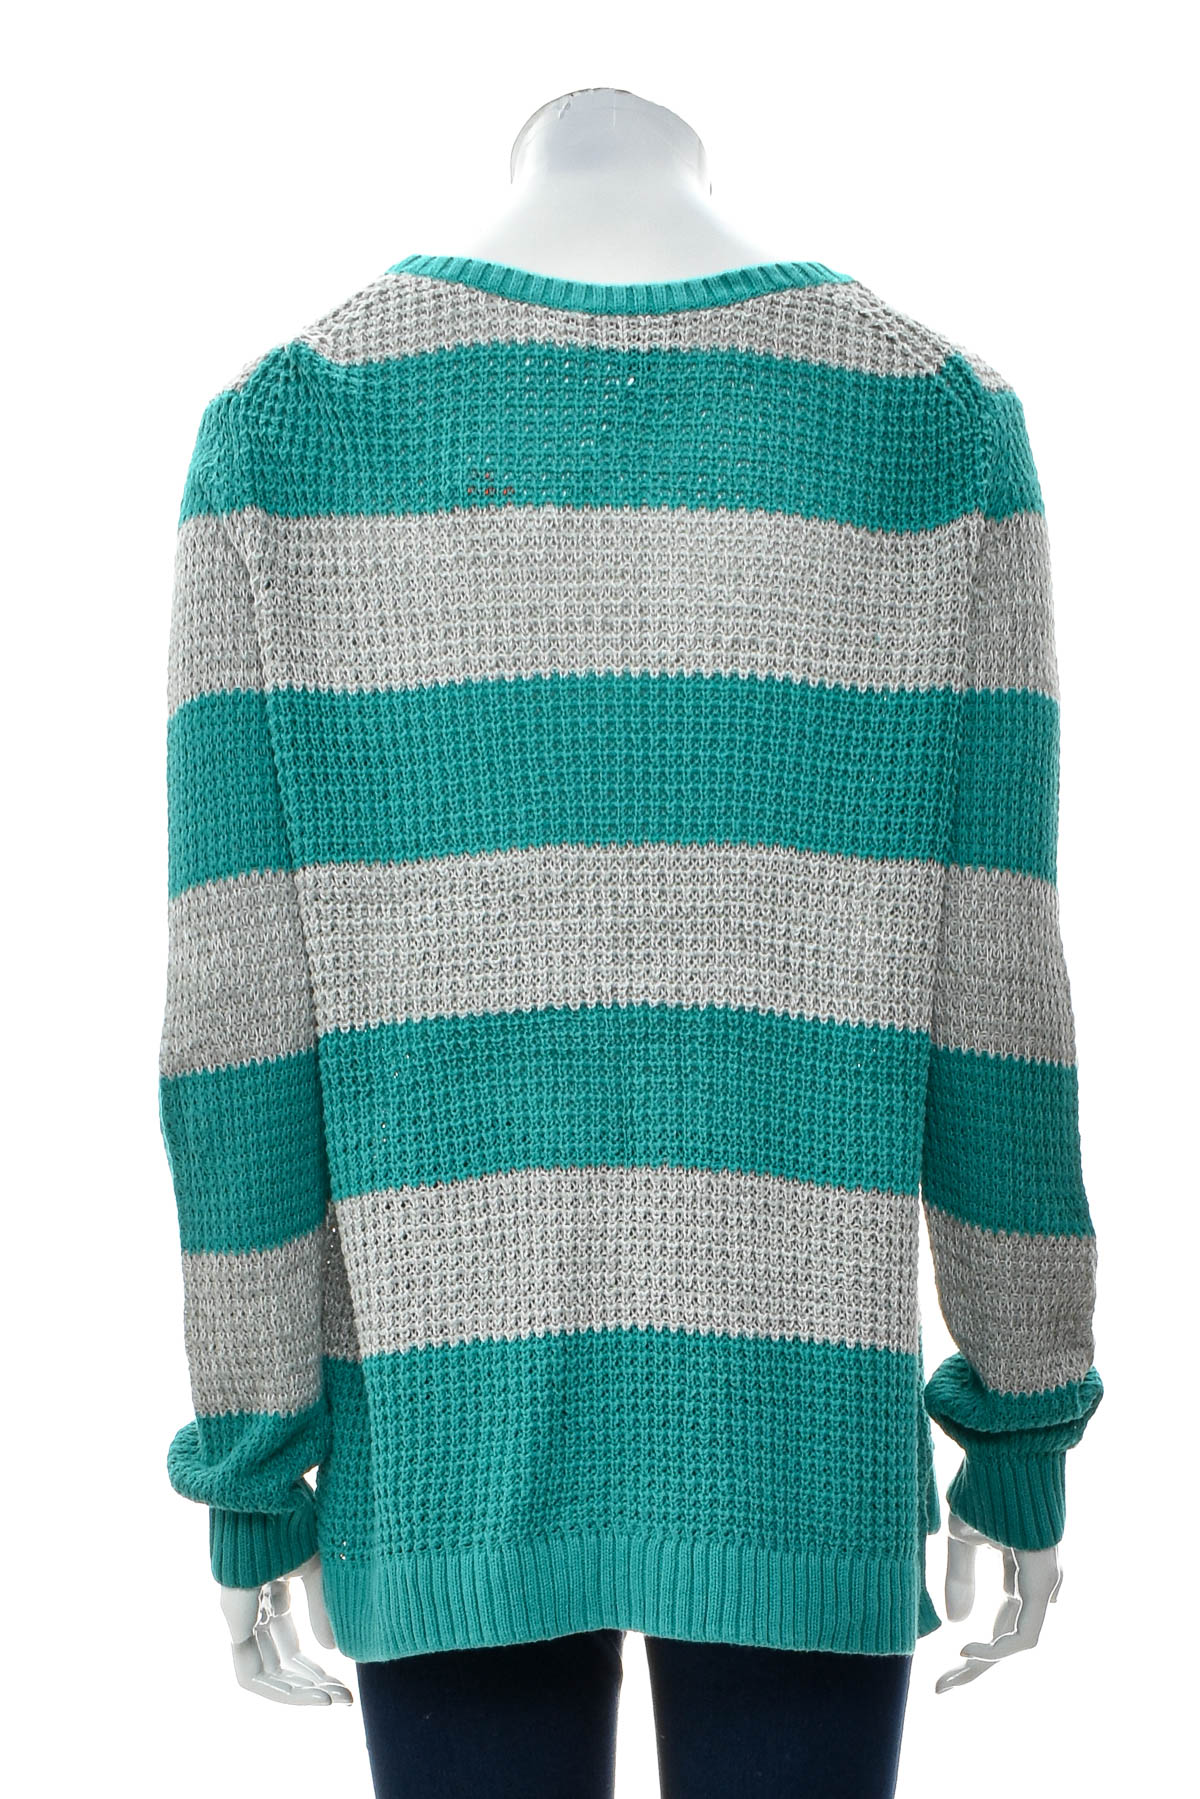 Women's sweater - A.n.a - 1